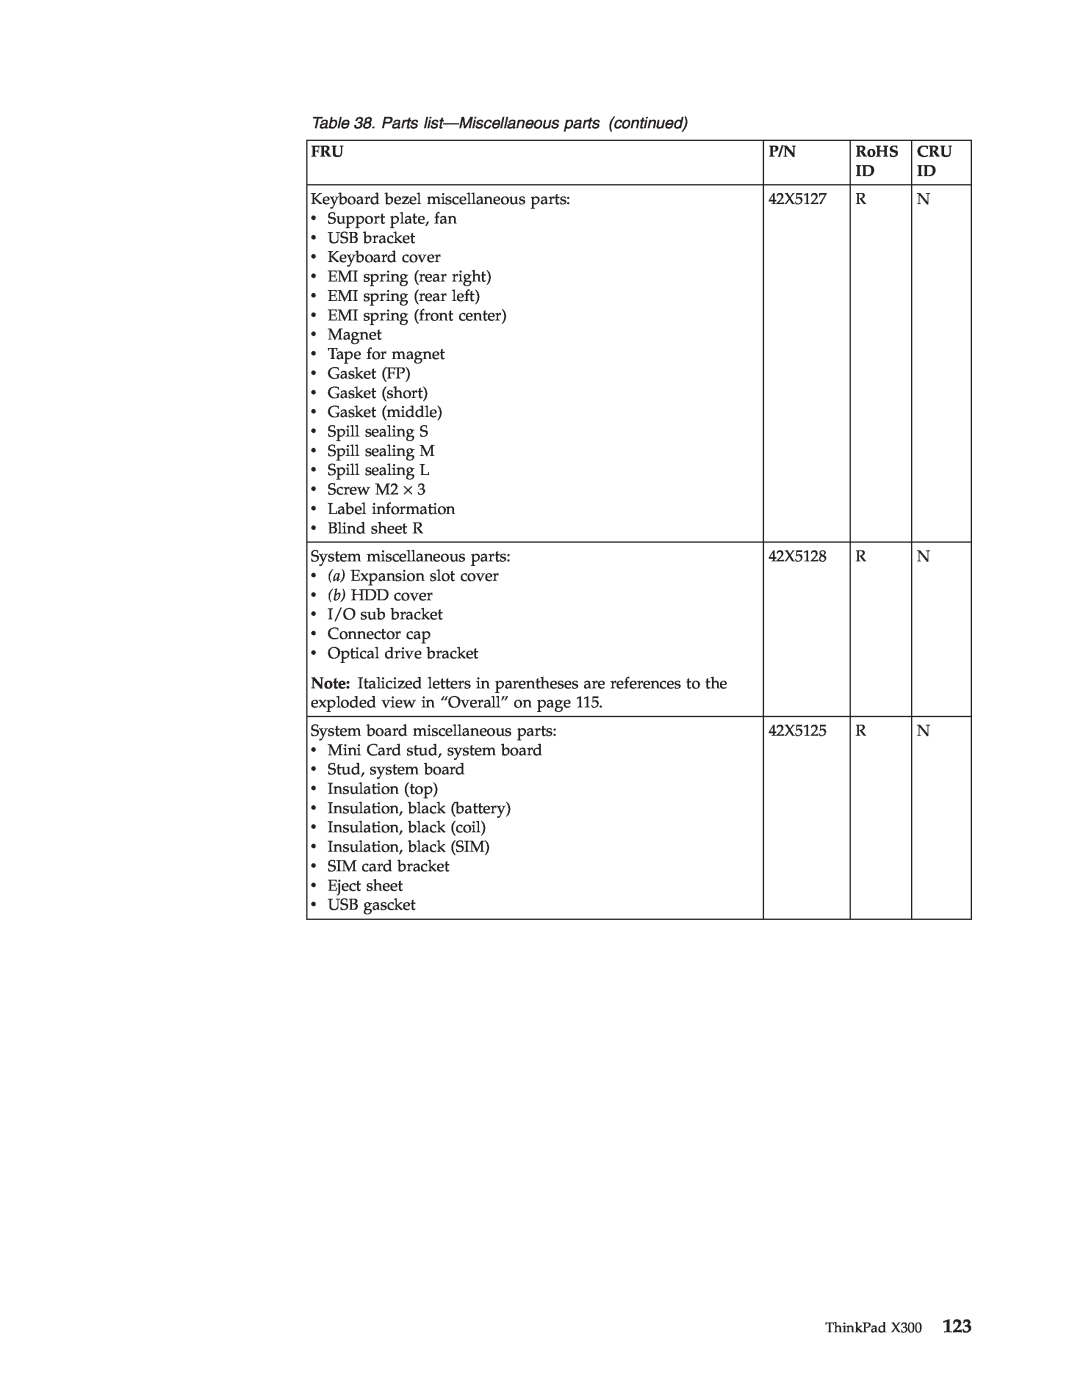 Lenovo X300 manual Parts list-Miscellaneous parts, continued, RoHS 